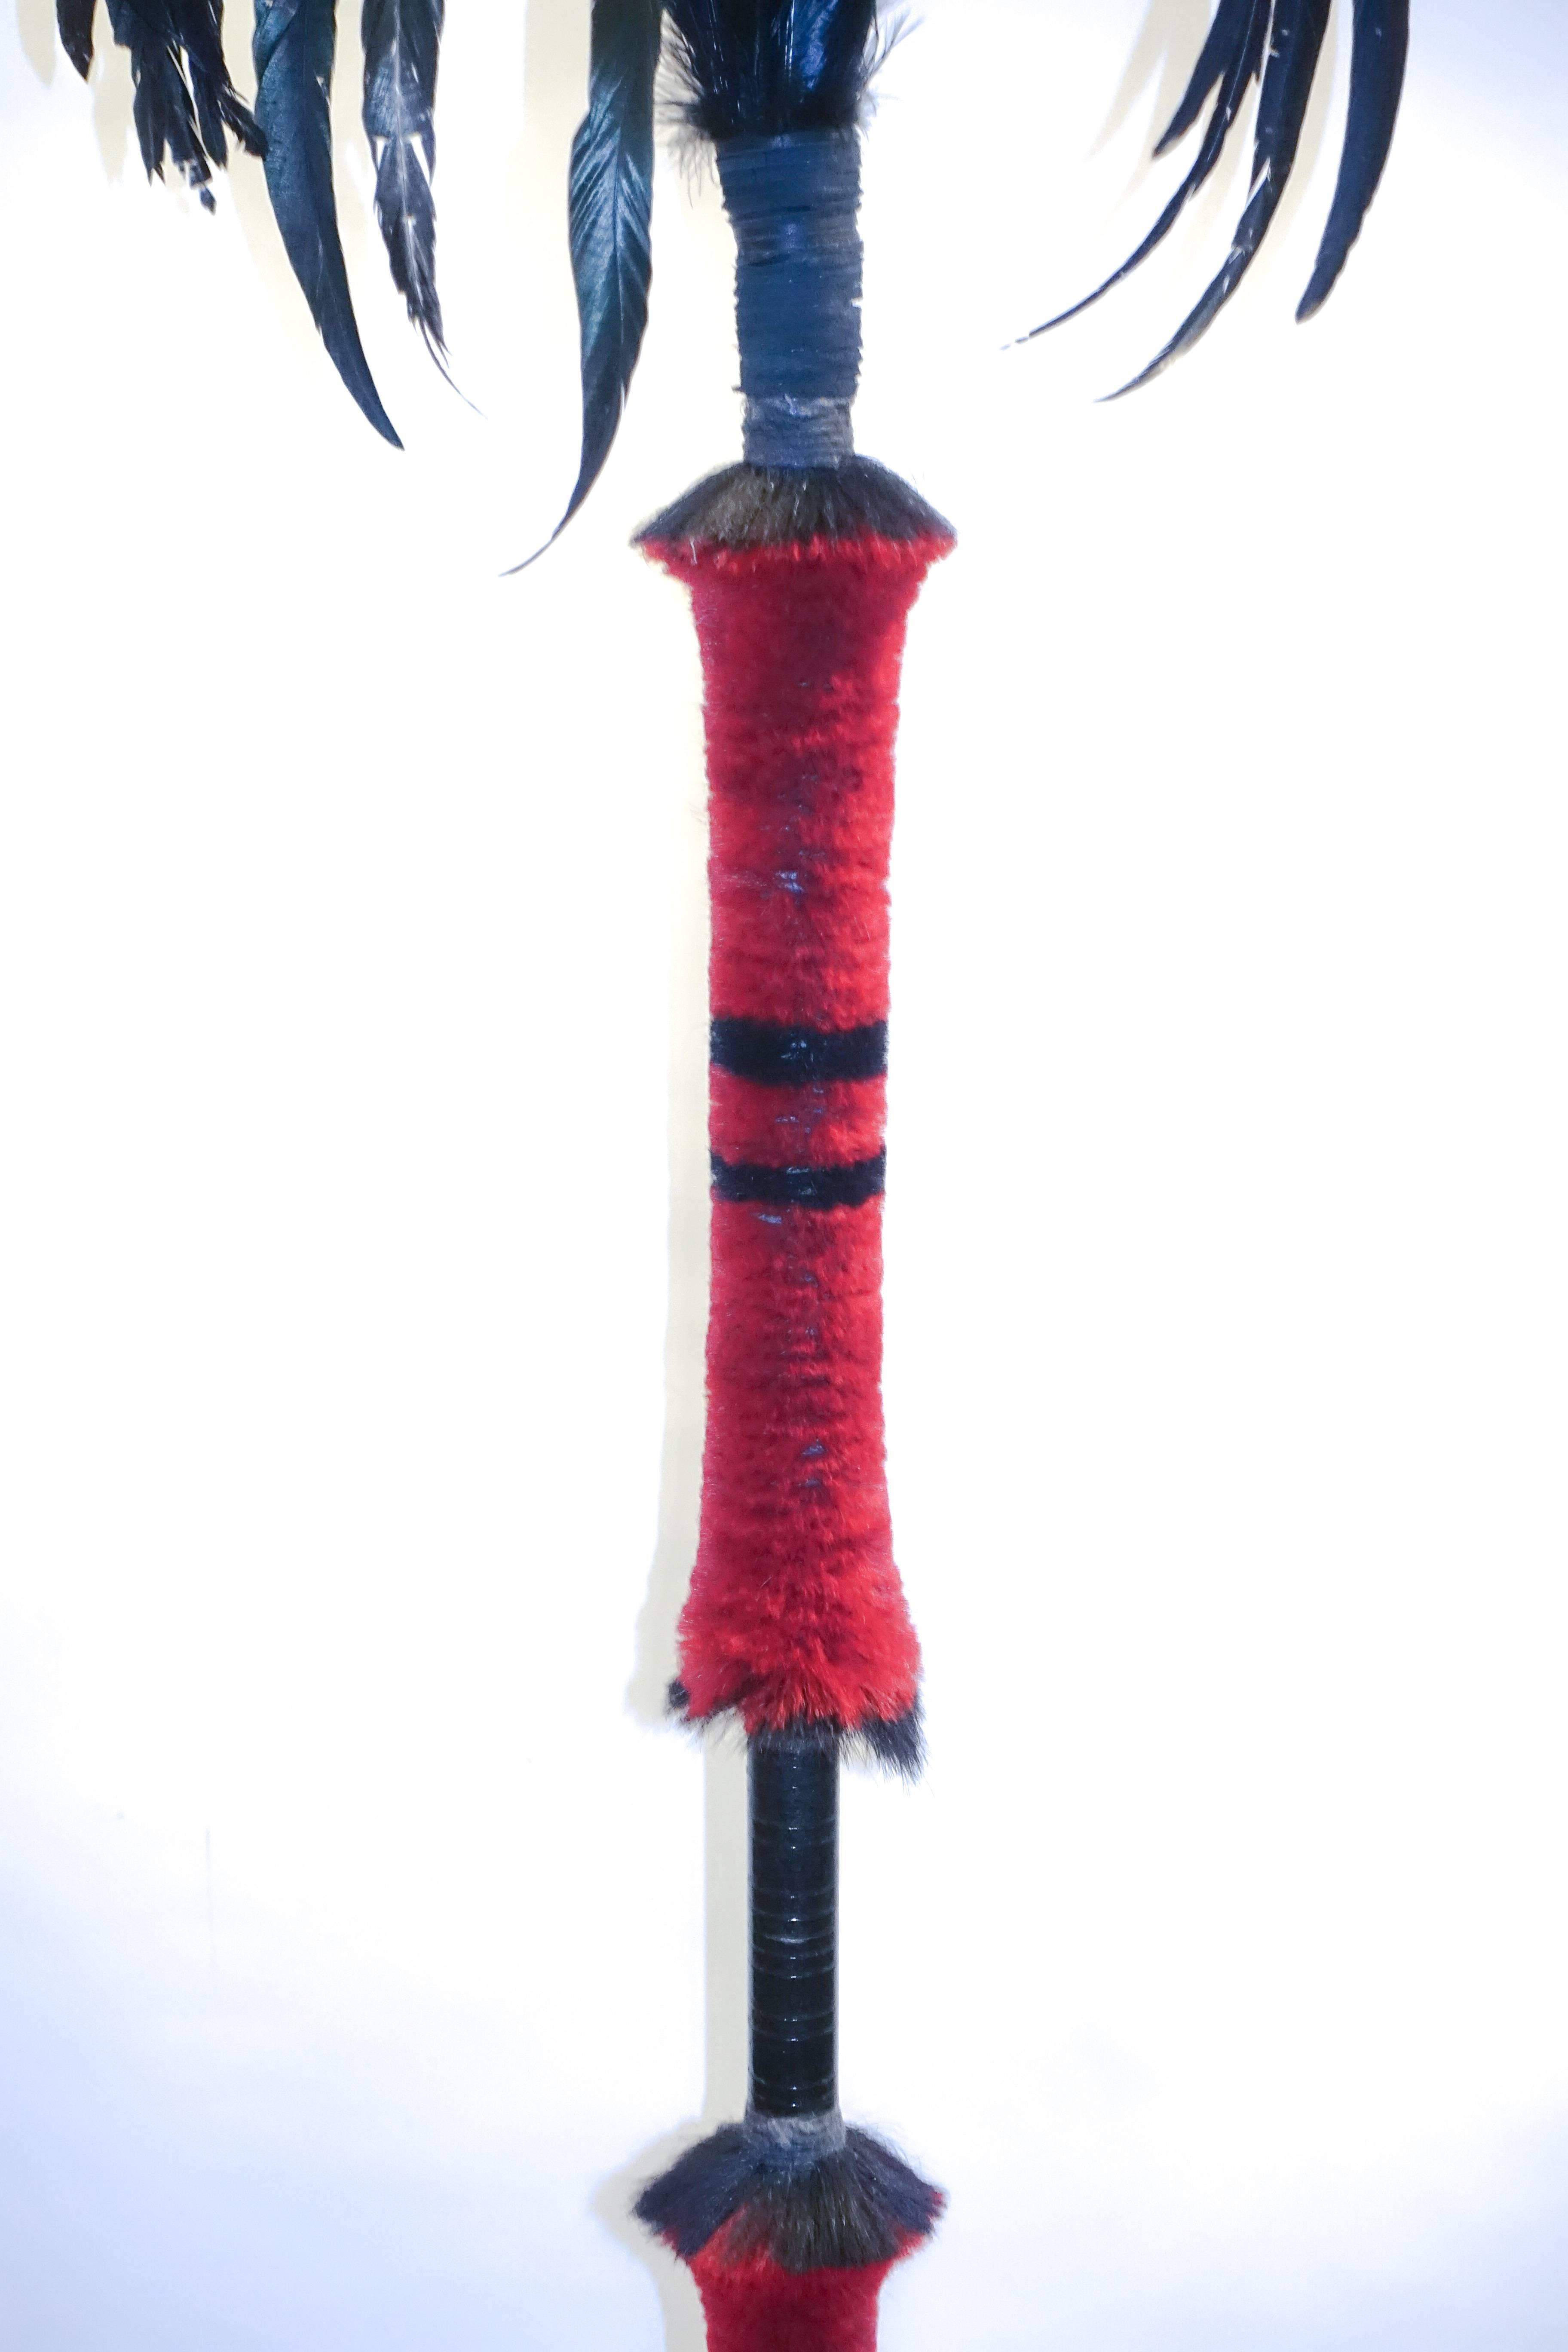 naga traditional spear